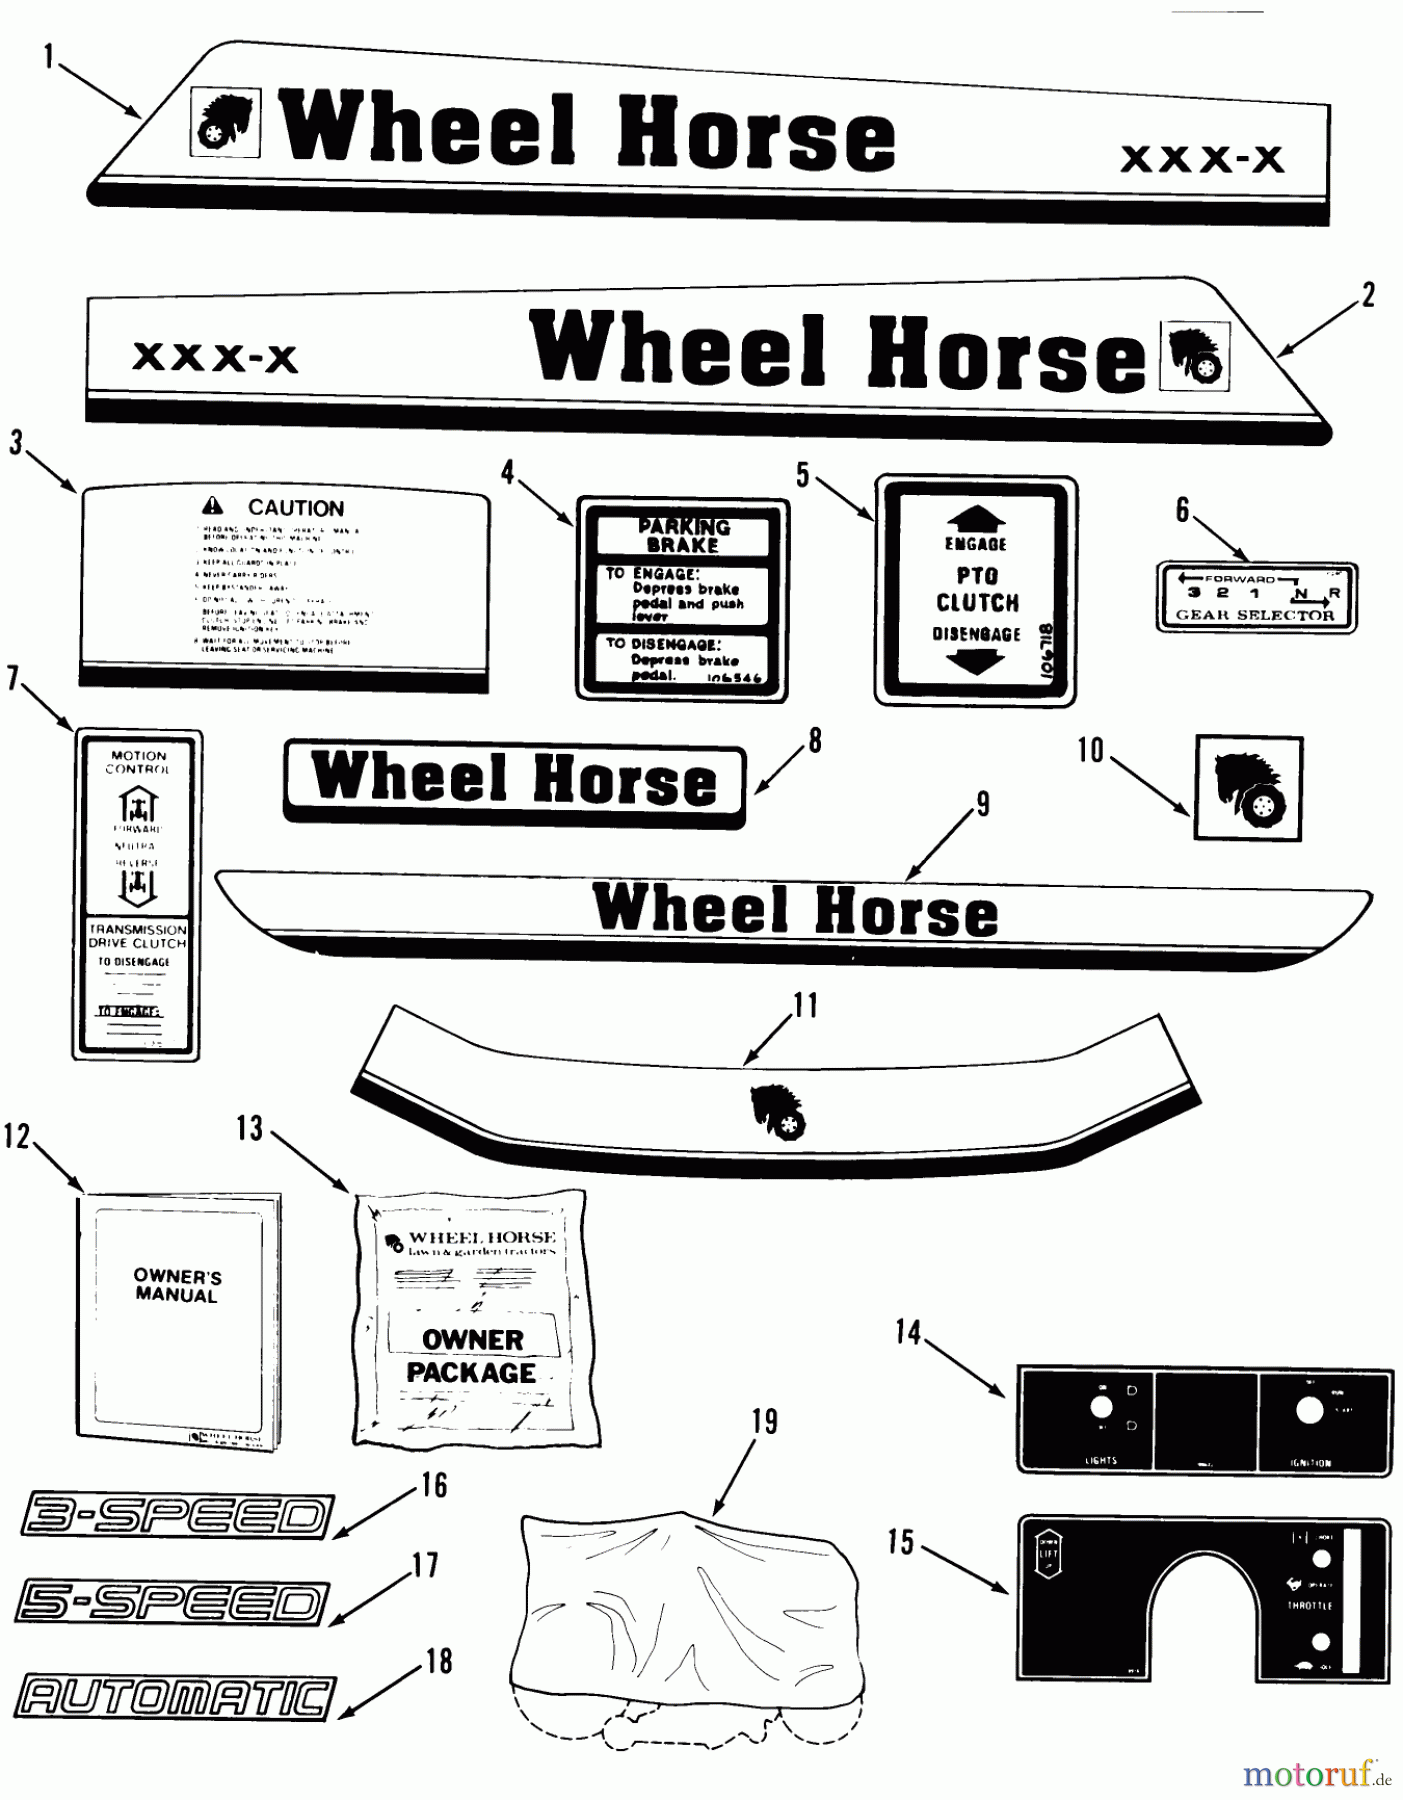  Toro Neu Mowers, Lawn & Garden Tractor Seite 1 22-11B501 (211-5) - Toro 211-5 Tractor, 1985 DECALS, MISCELLANEOUS